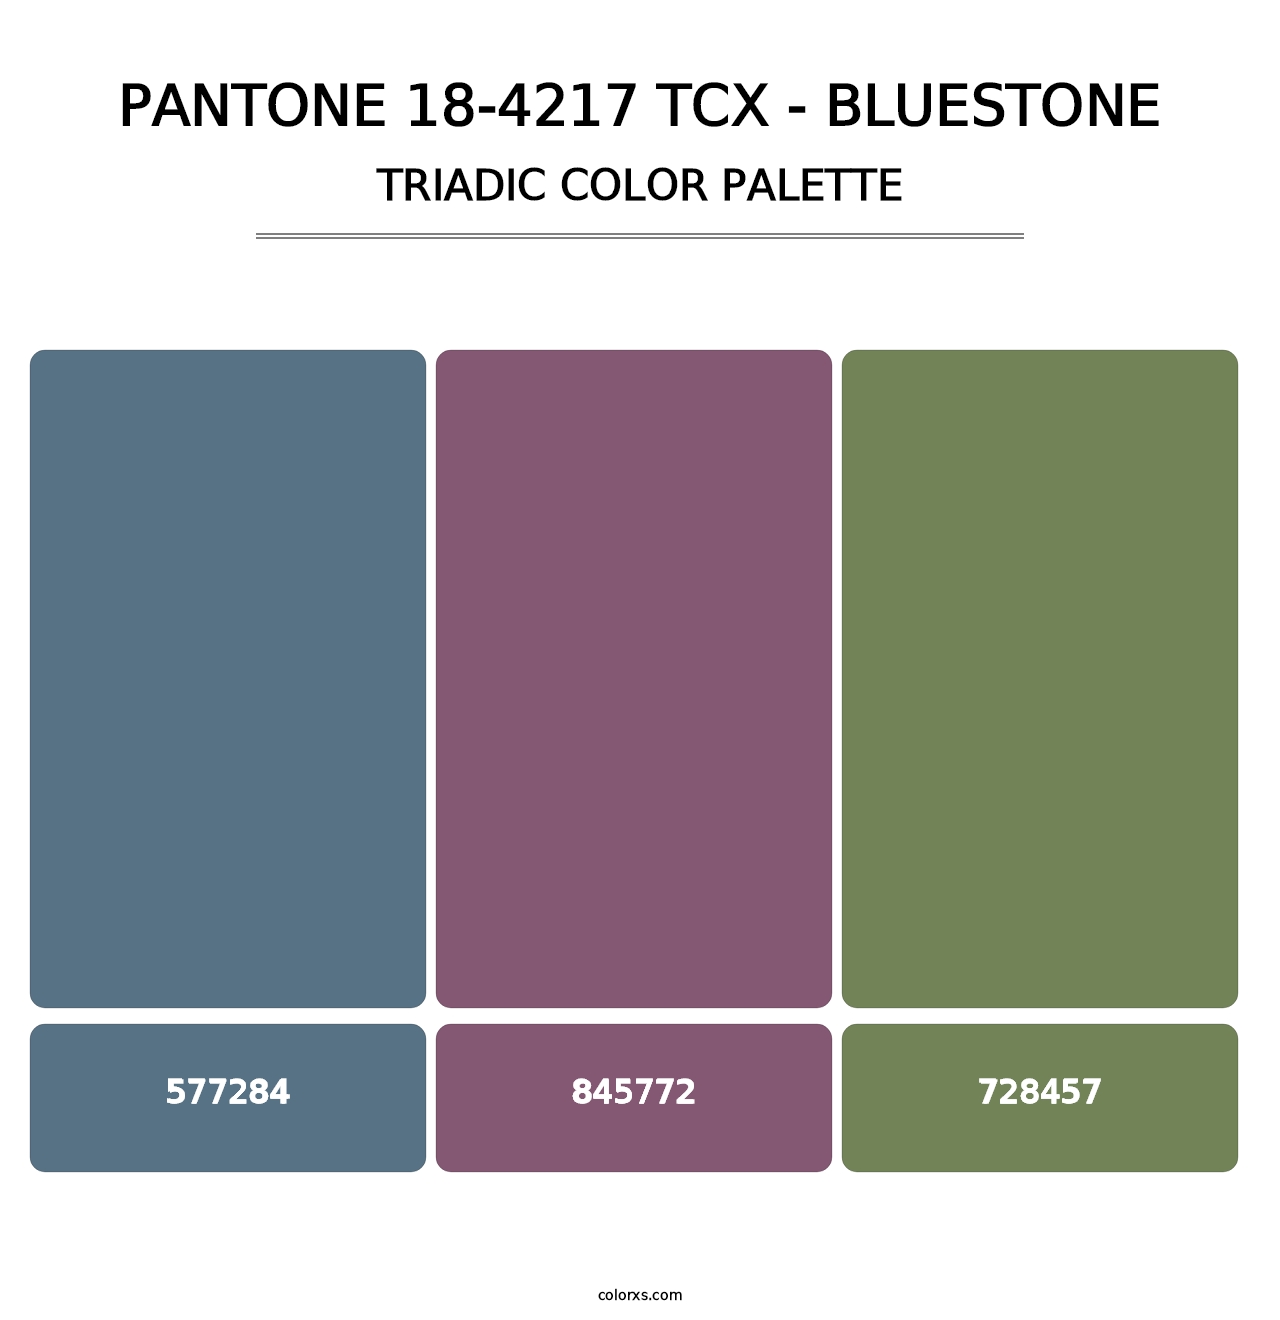 PANTONE 18-4217 TCX - Bluestone - Triadic Color Palette